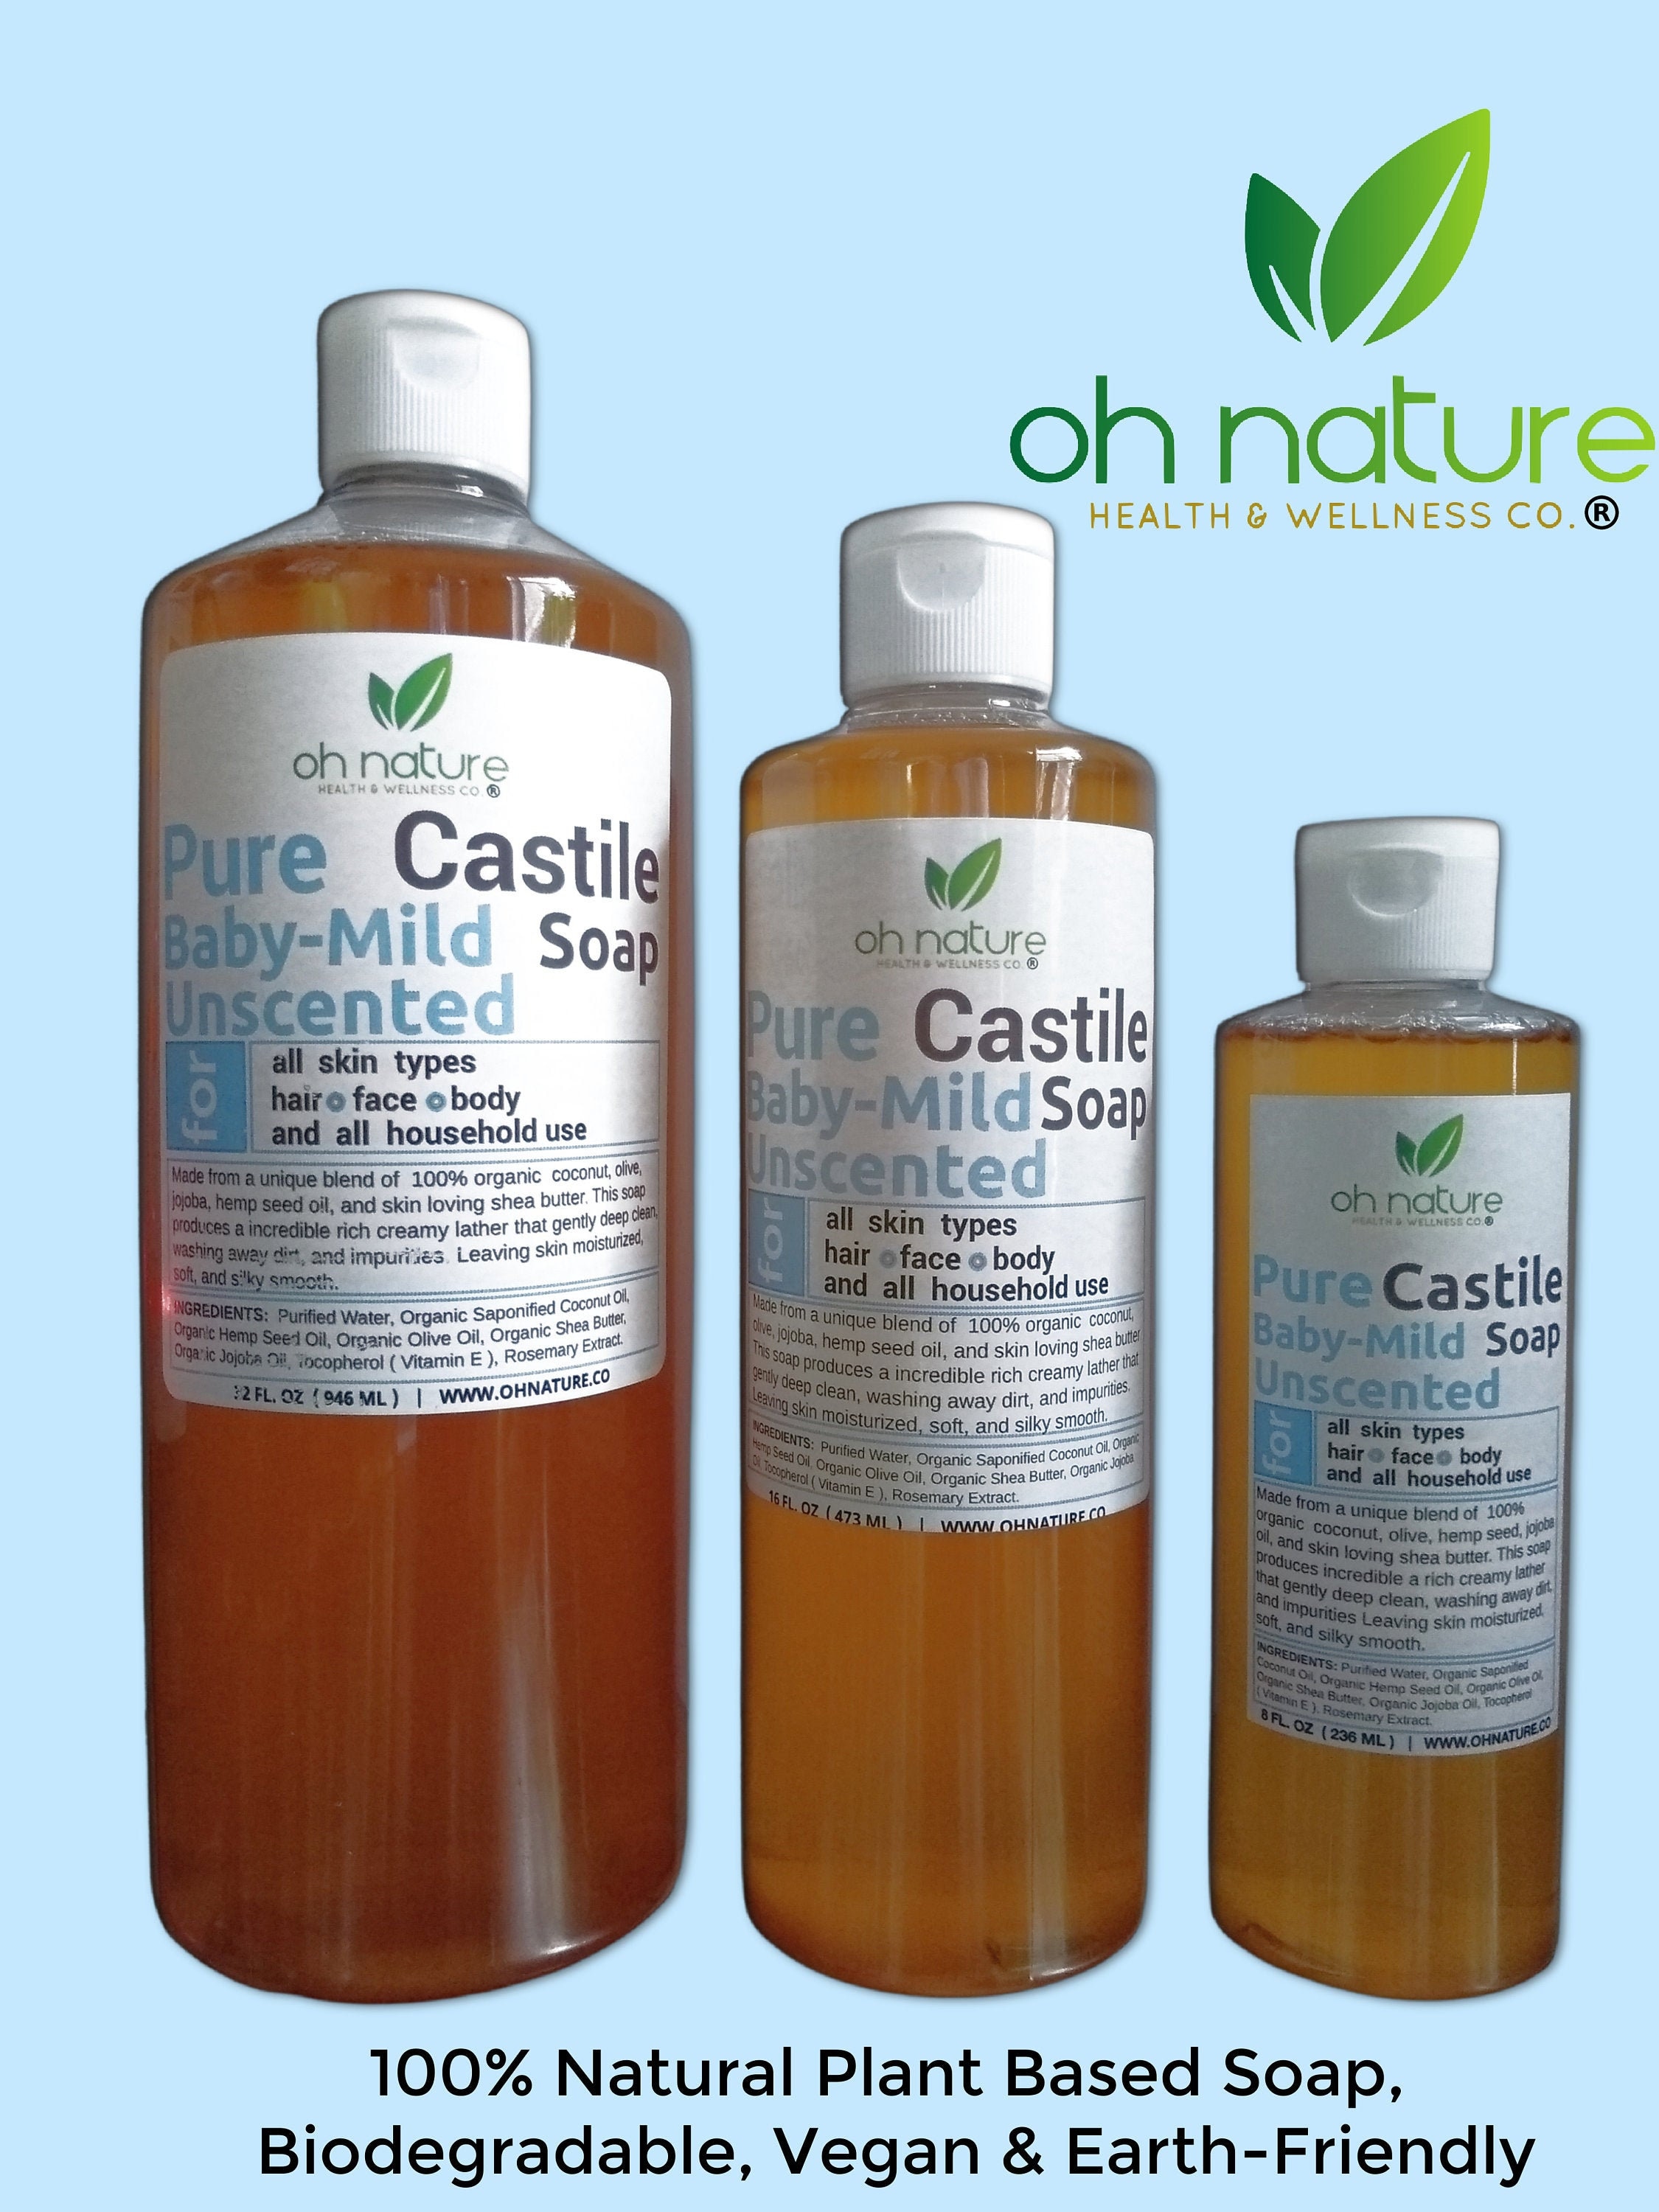 Natural Sense Pure Castile Soap Plant-Based Moisturizing, ALMOND SCENT